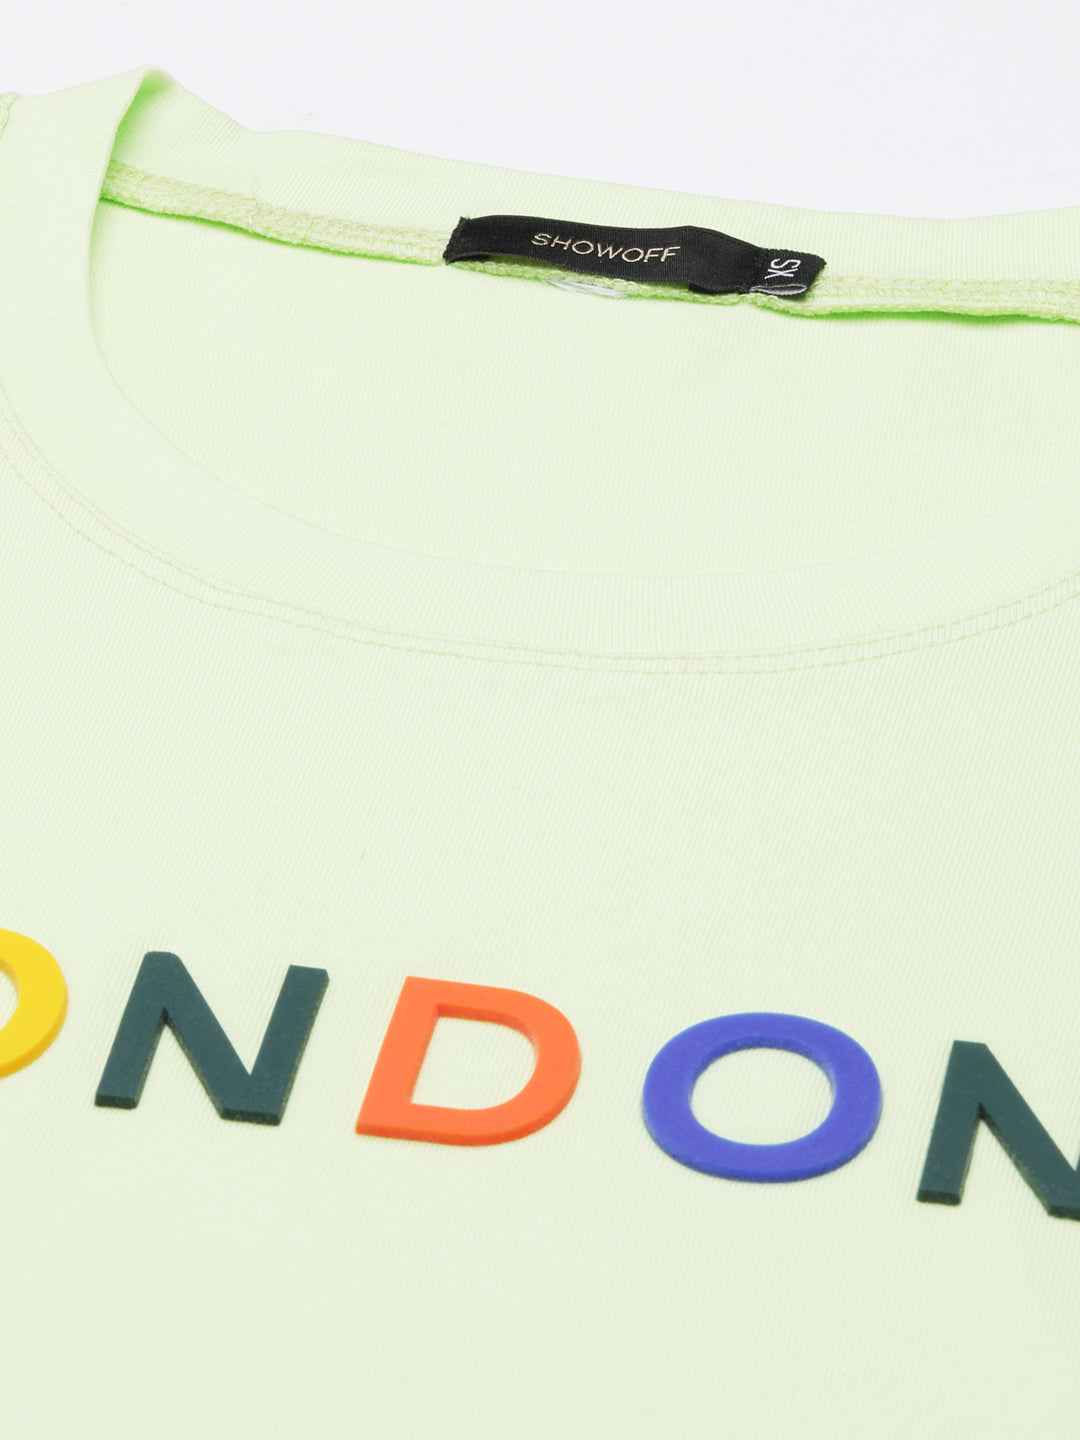 Women Lime Green Typography T Shirt